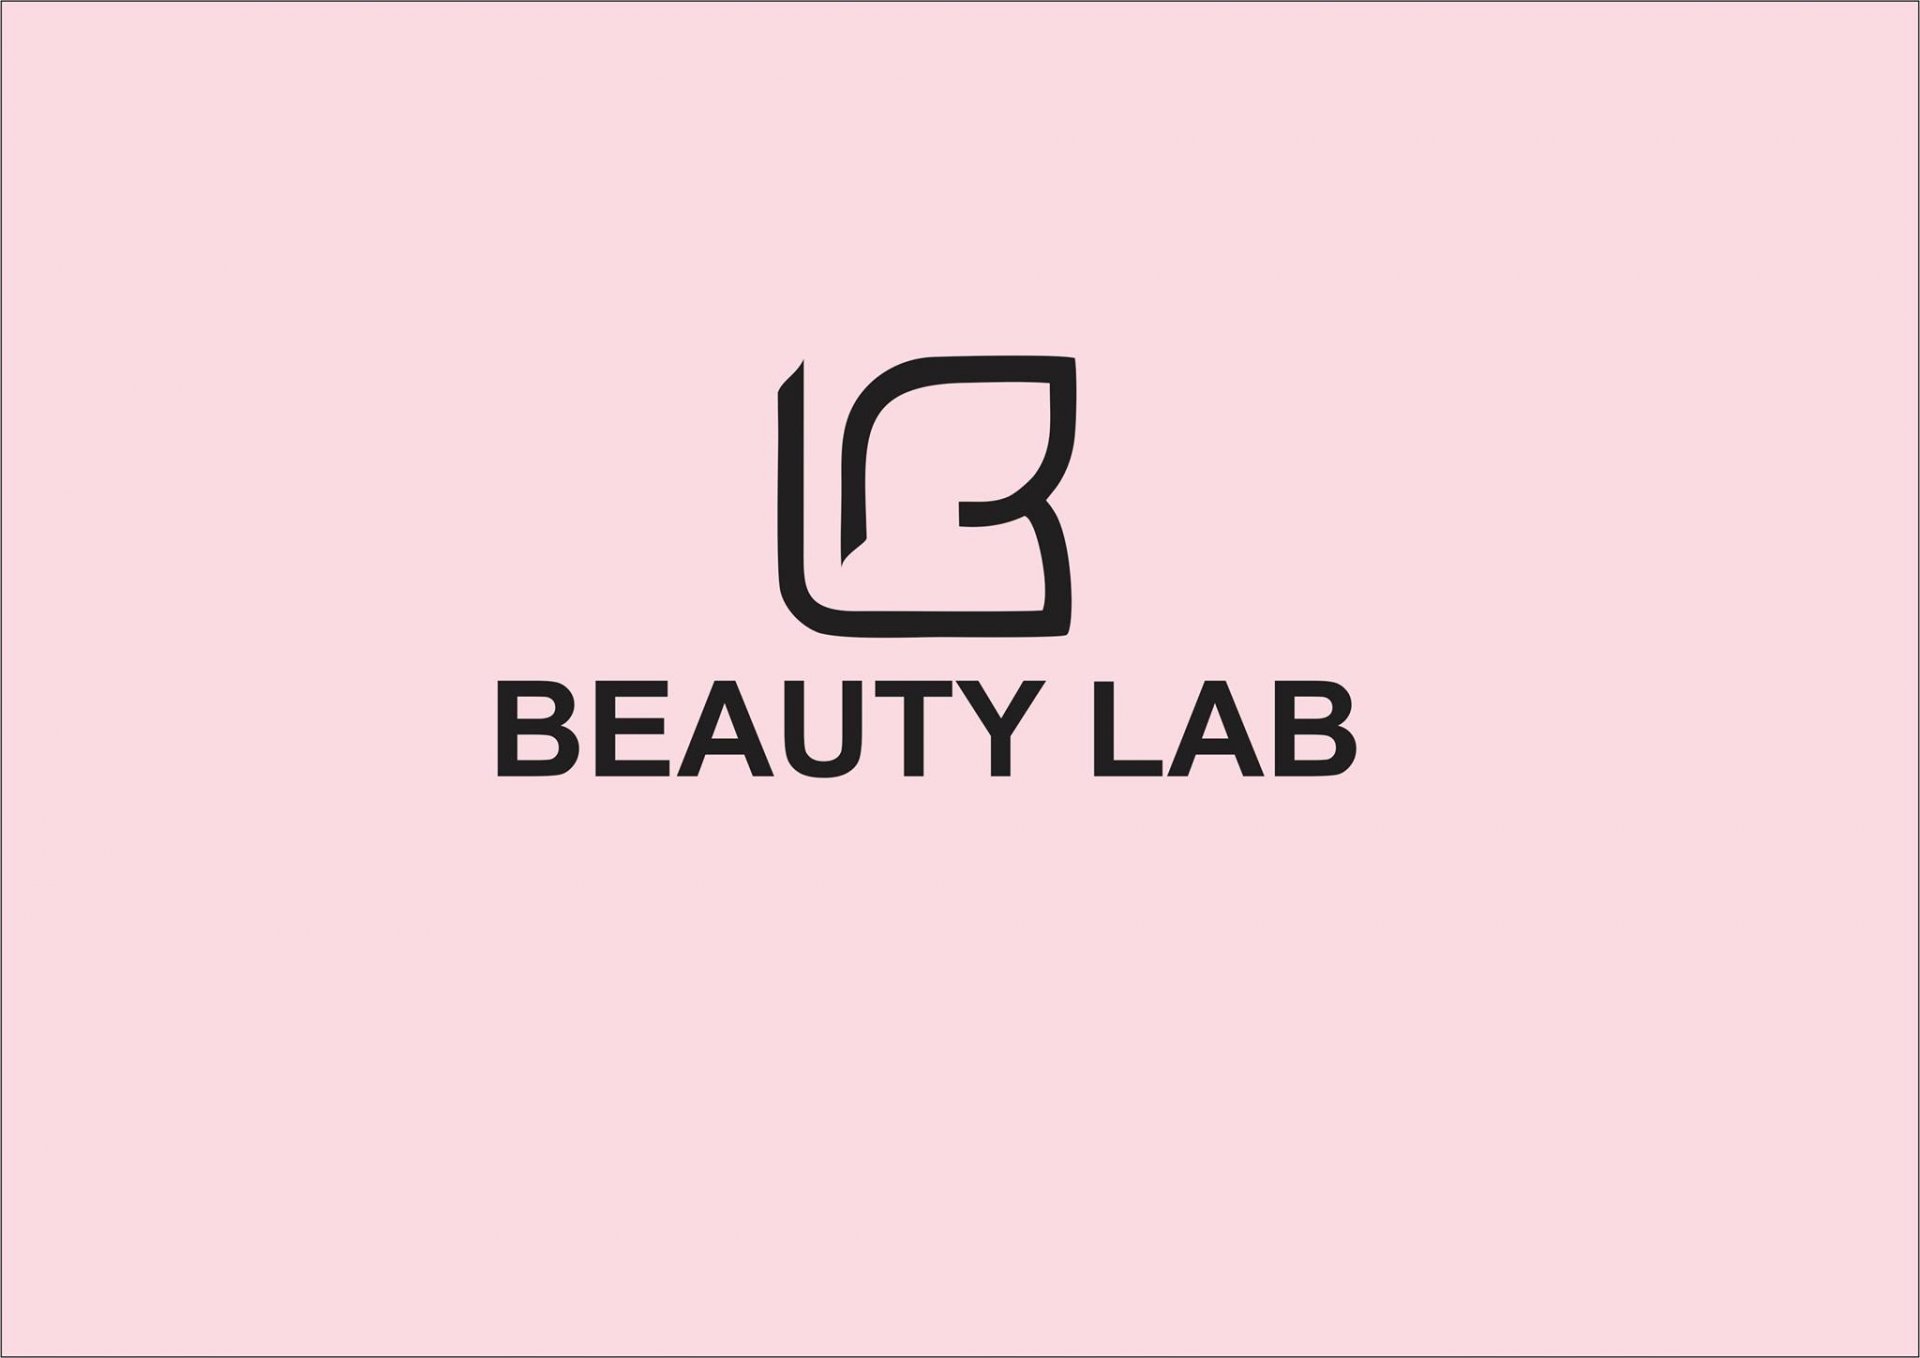 Beauty lab. Бьюти Лаб. Beauty Lab логотип. Beauty Lab интернет магазин профессиональной косметики. L logo Beauty.